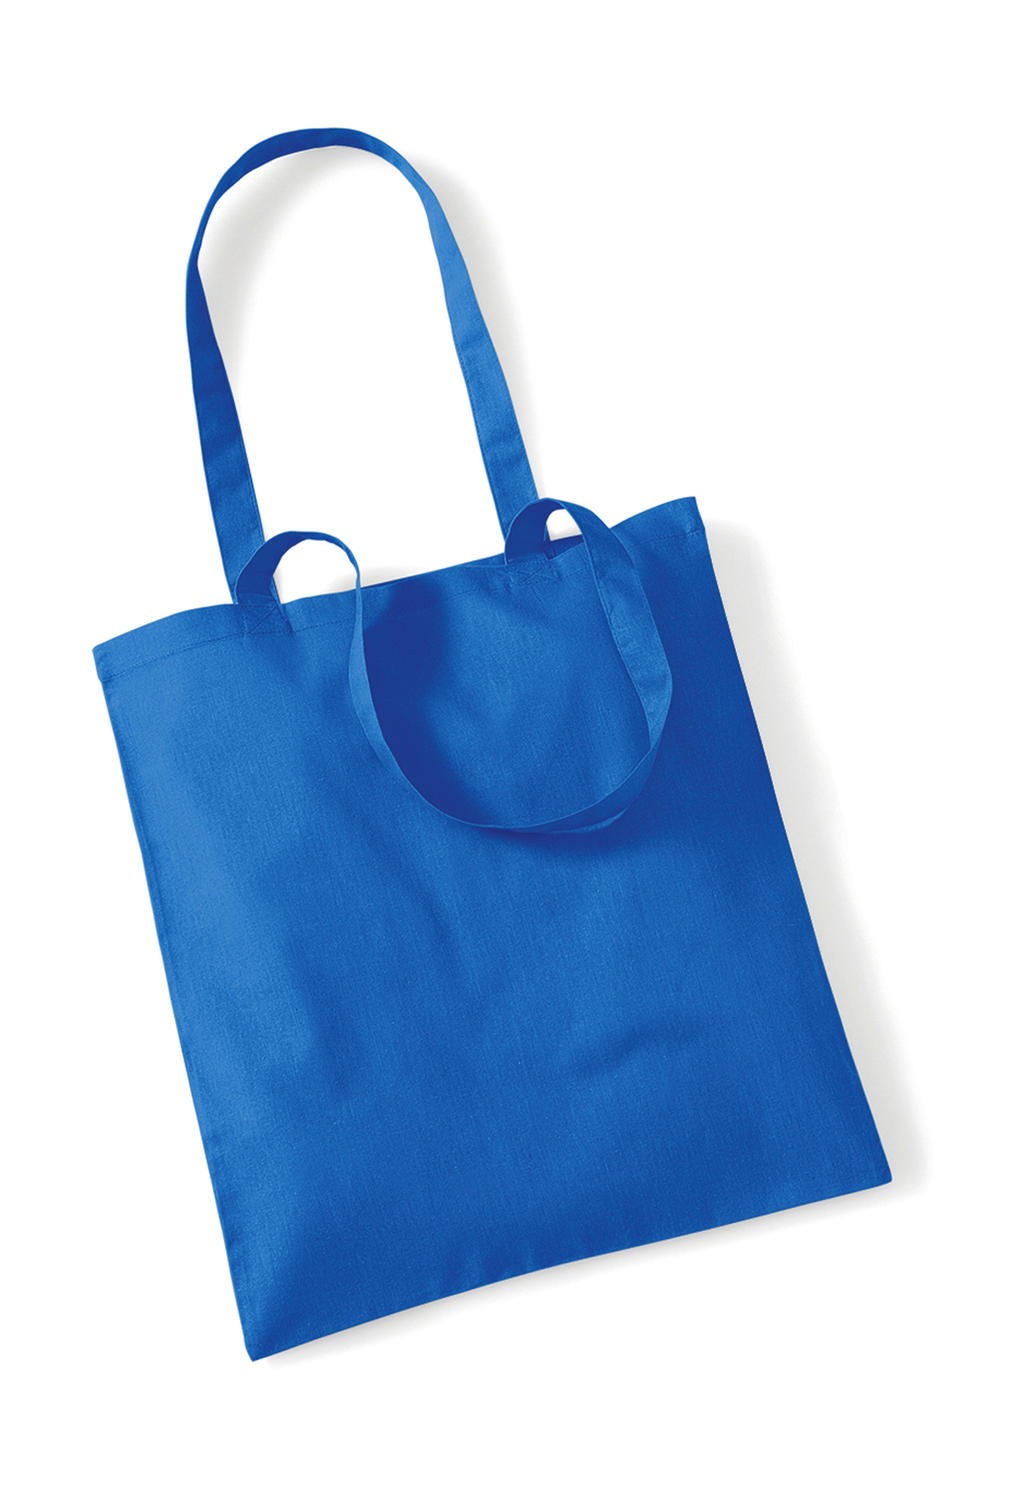  Bag for Life - Long Handles in Farbe Cornflower Blue